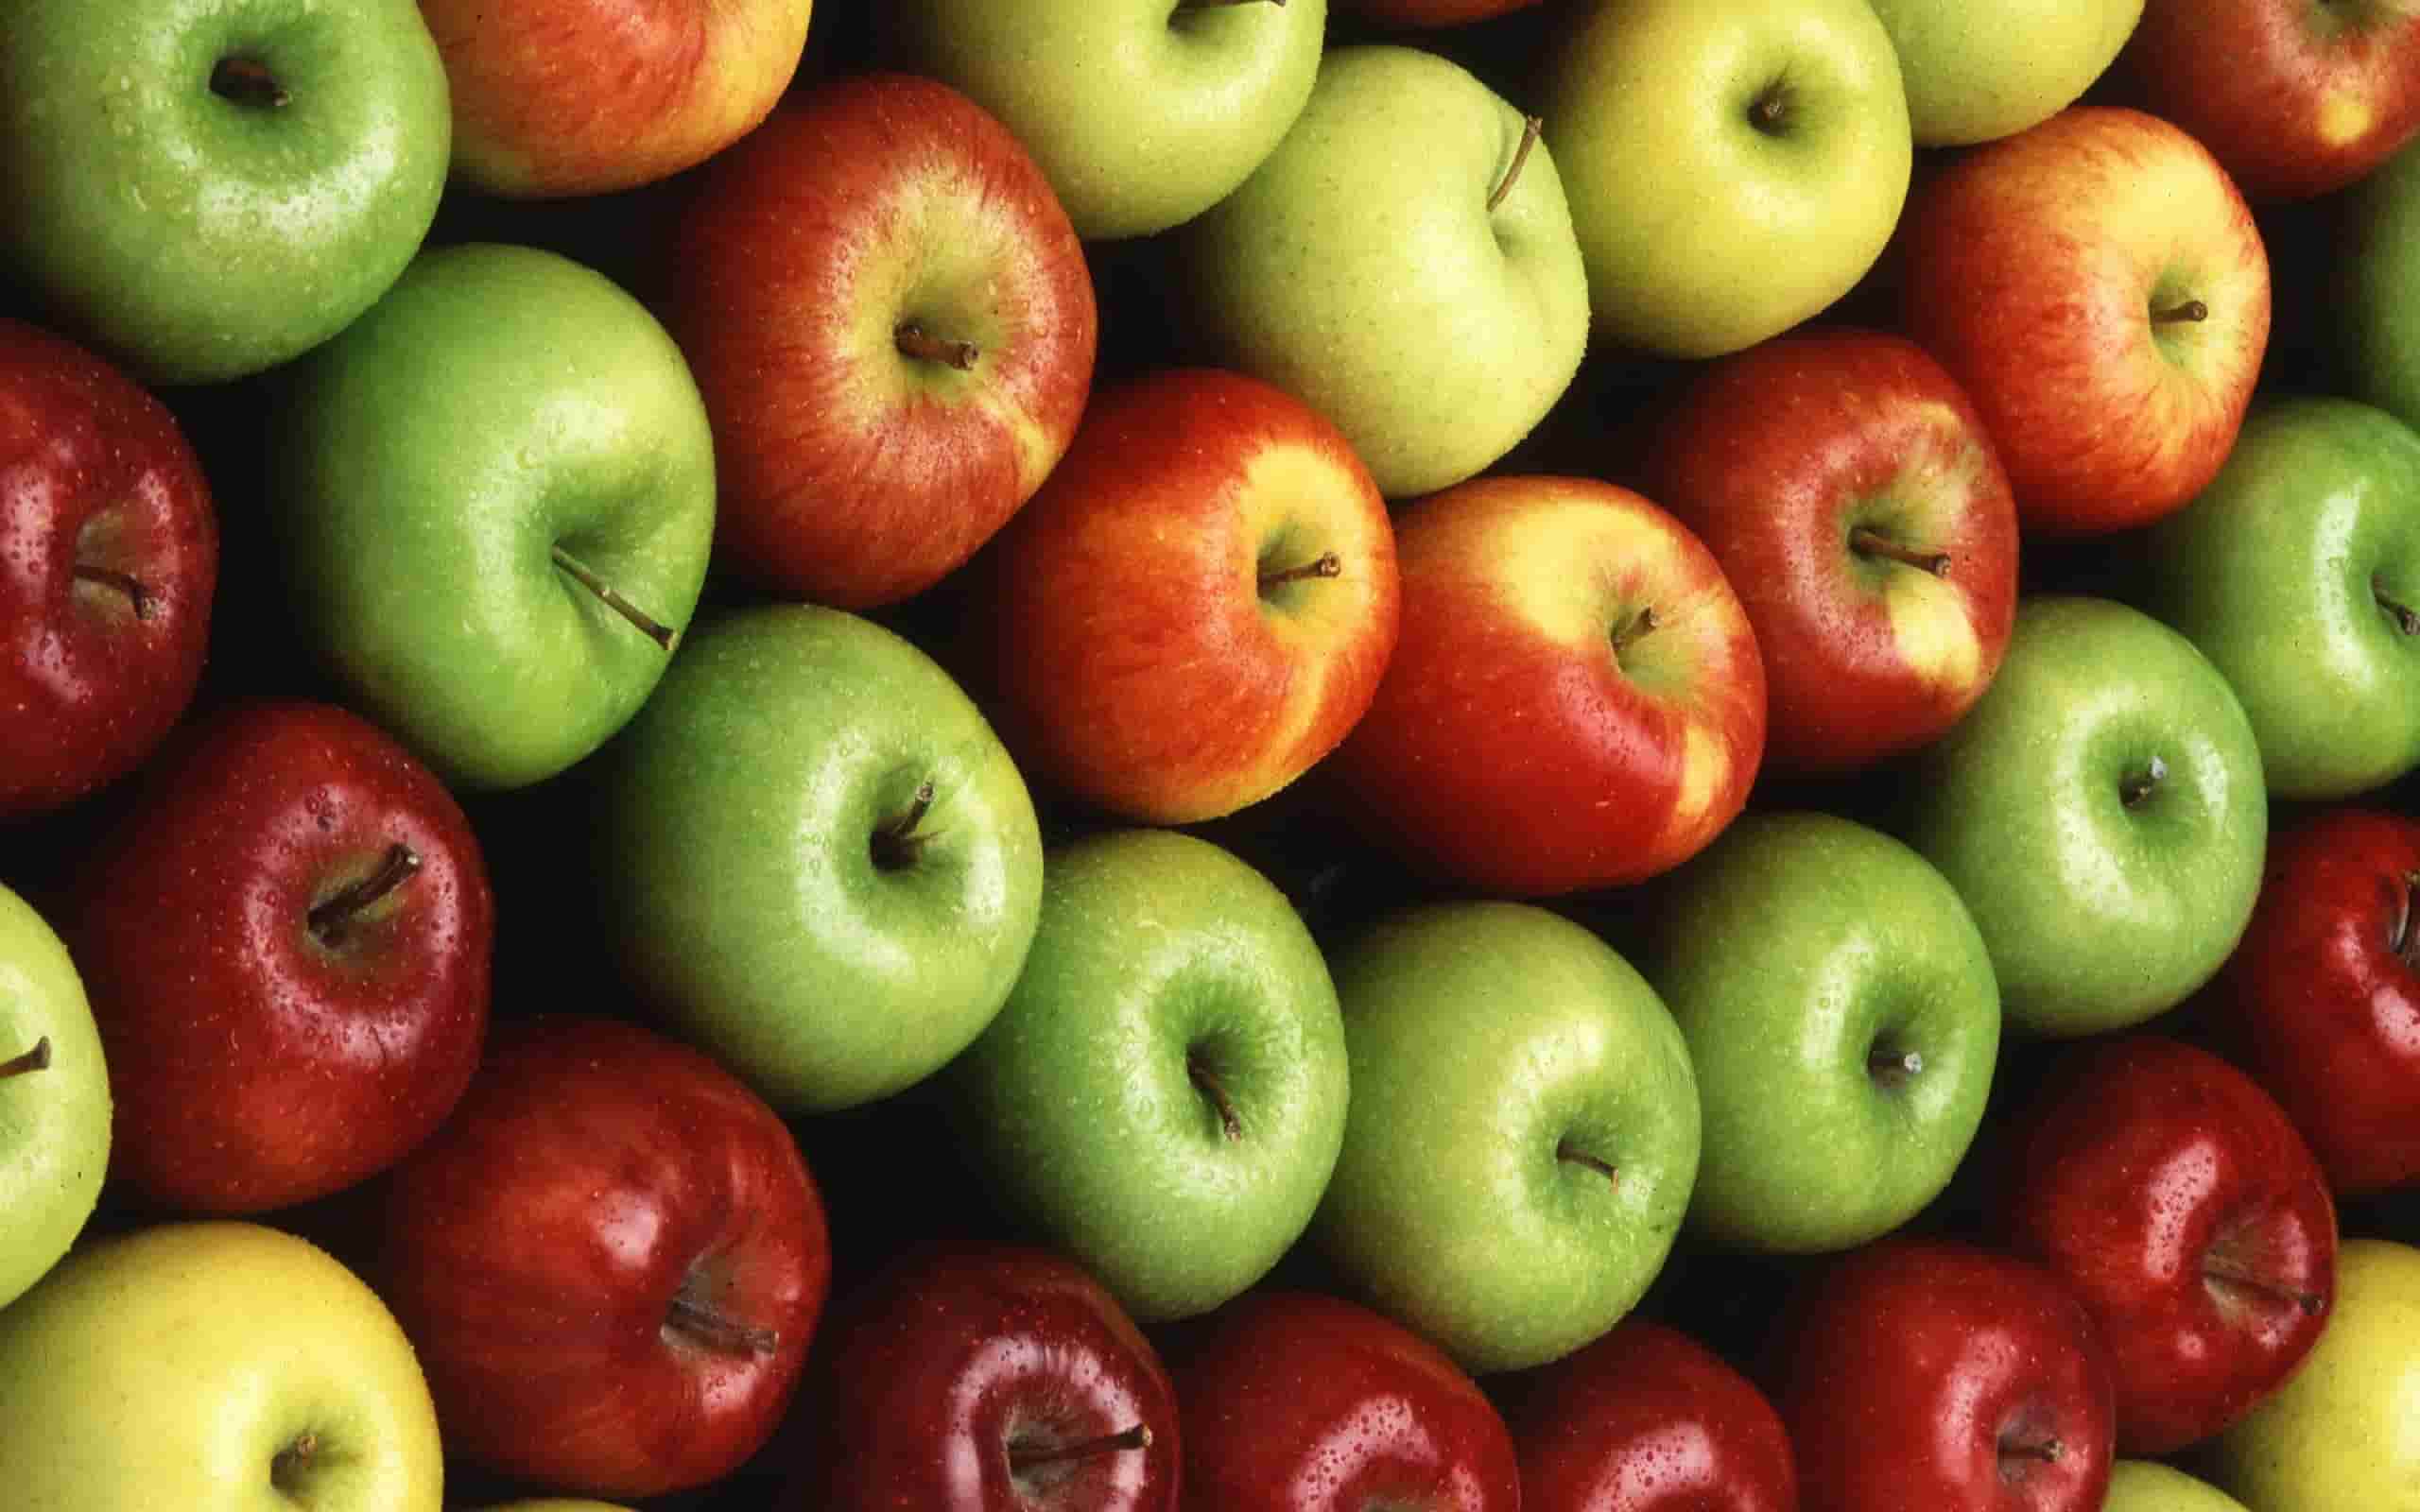 964970-apple-composition-apples-fruits